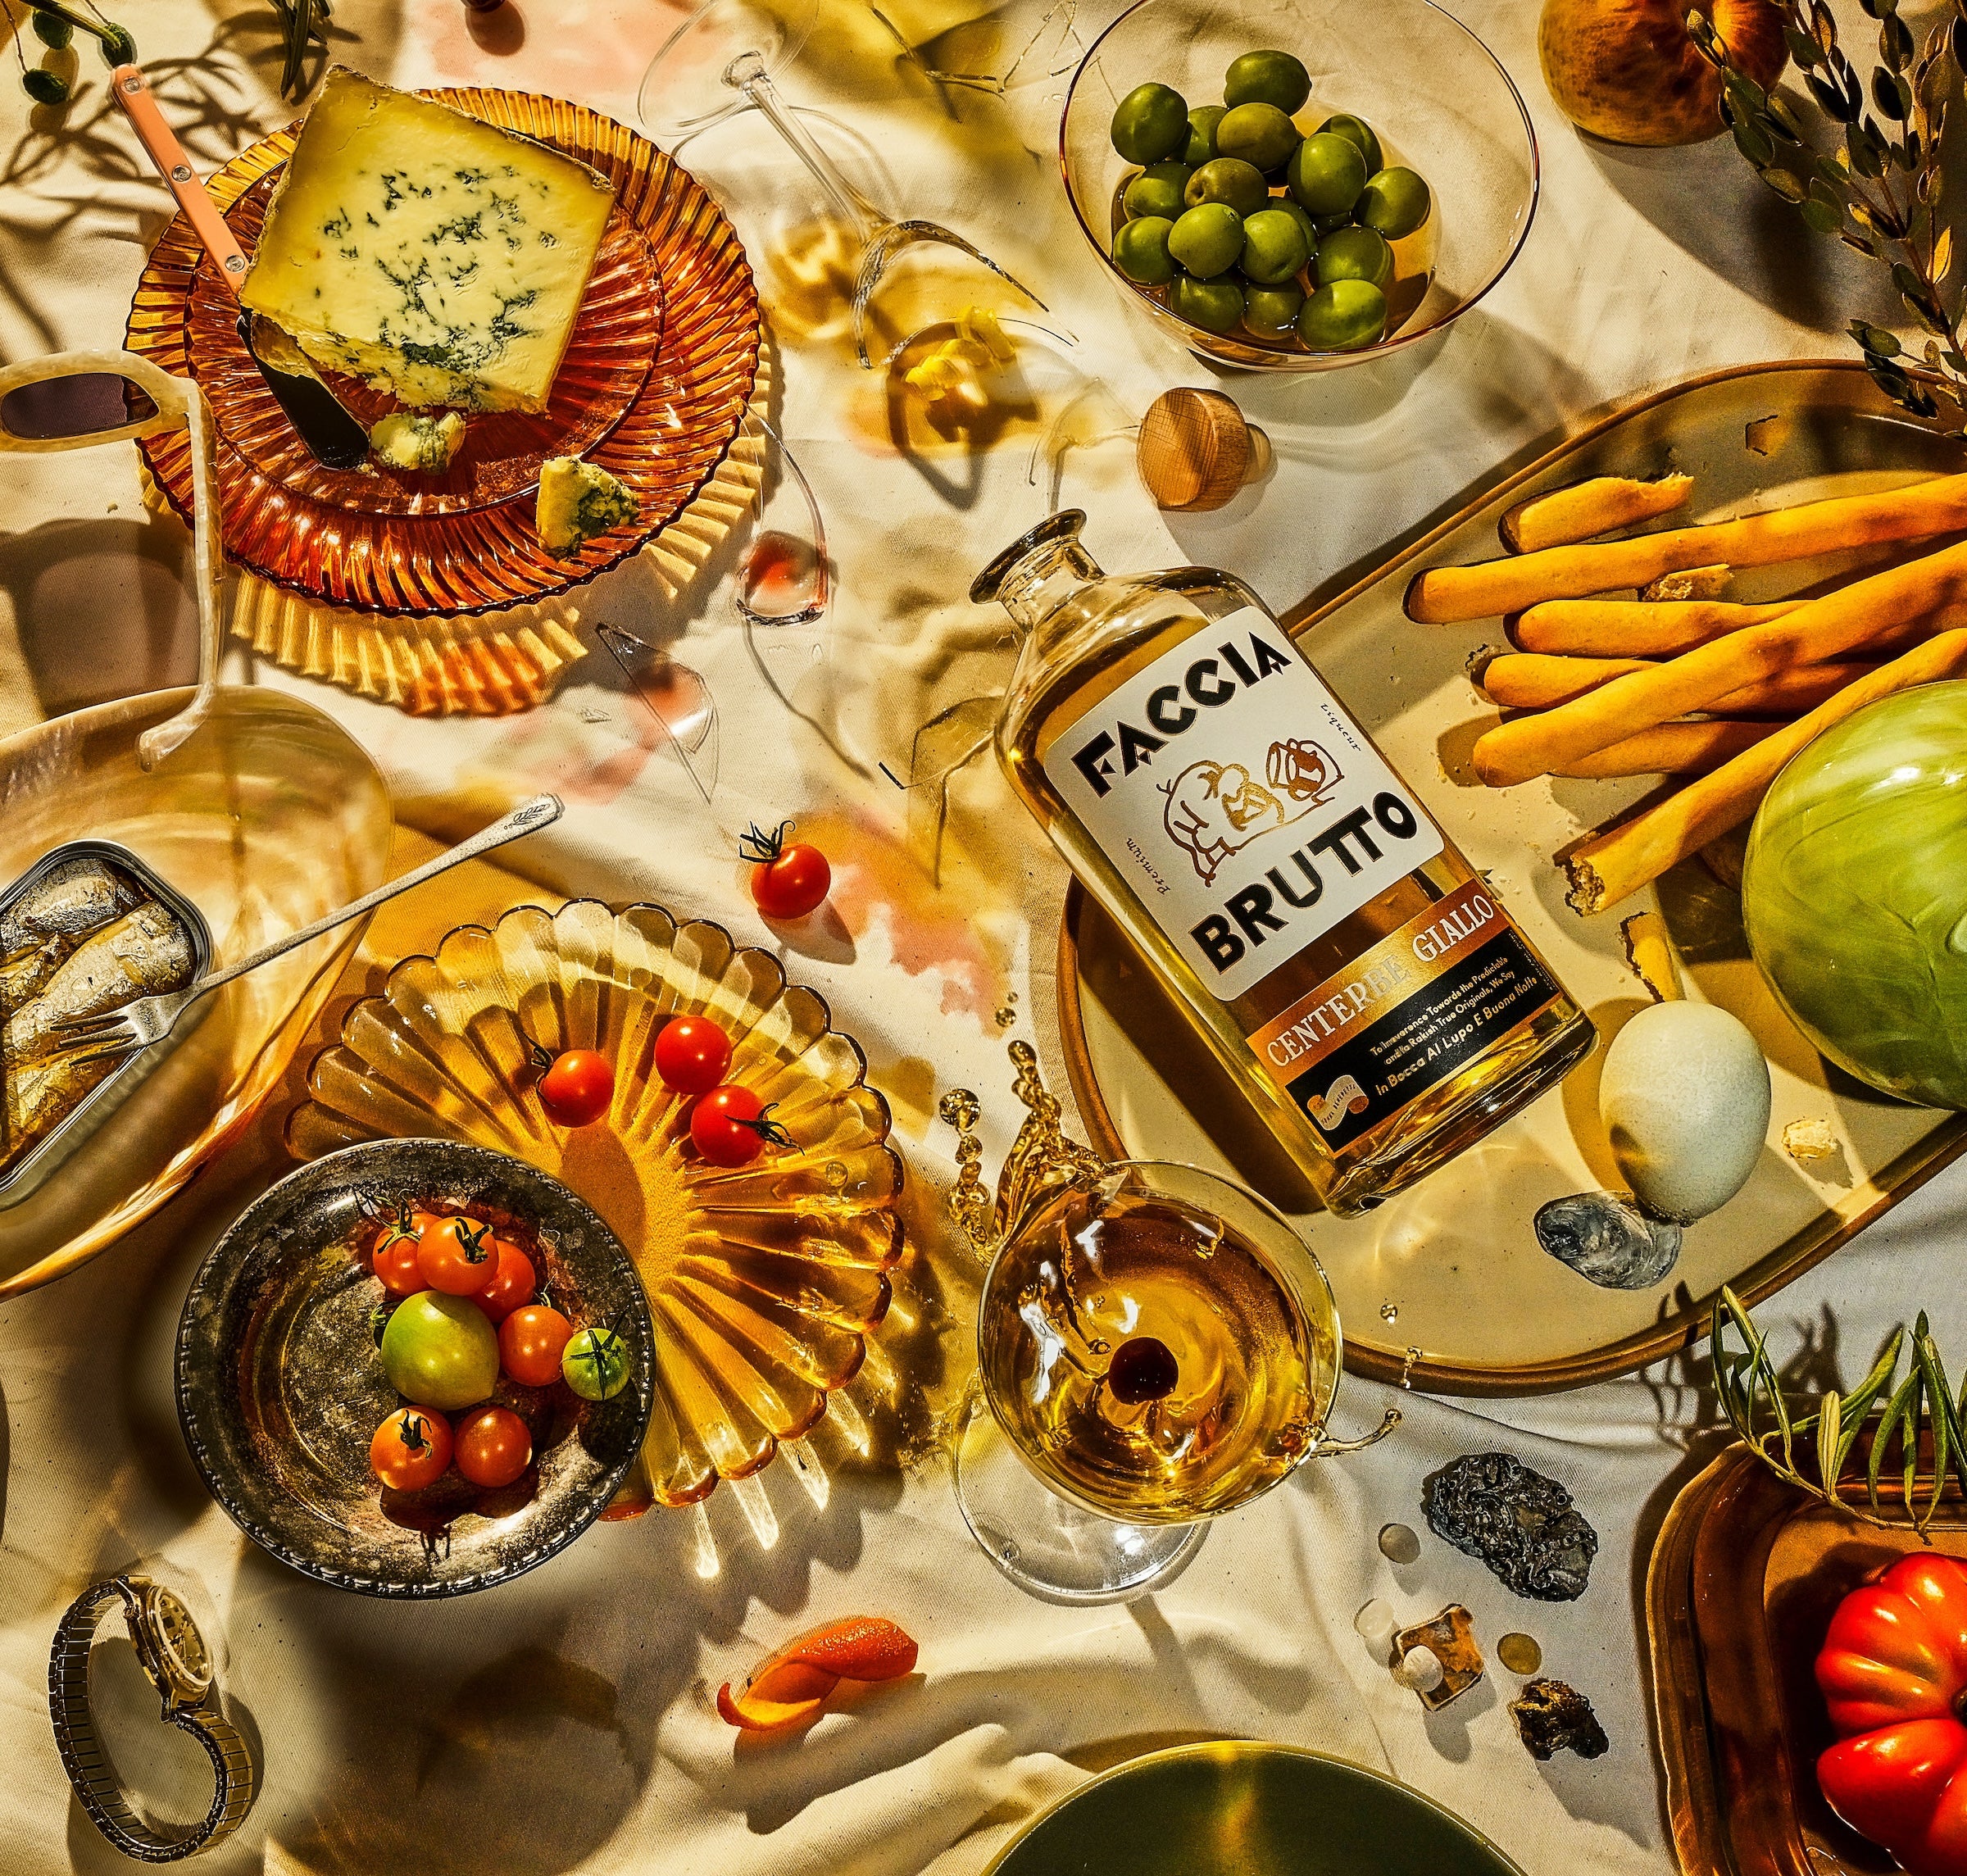 Tablescape with Faccia Brutto Centerbe Giallo bottle, cheese, olives, tomatoes, glasses, breadsticks